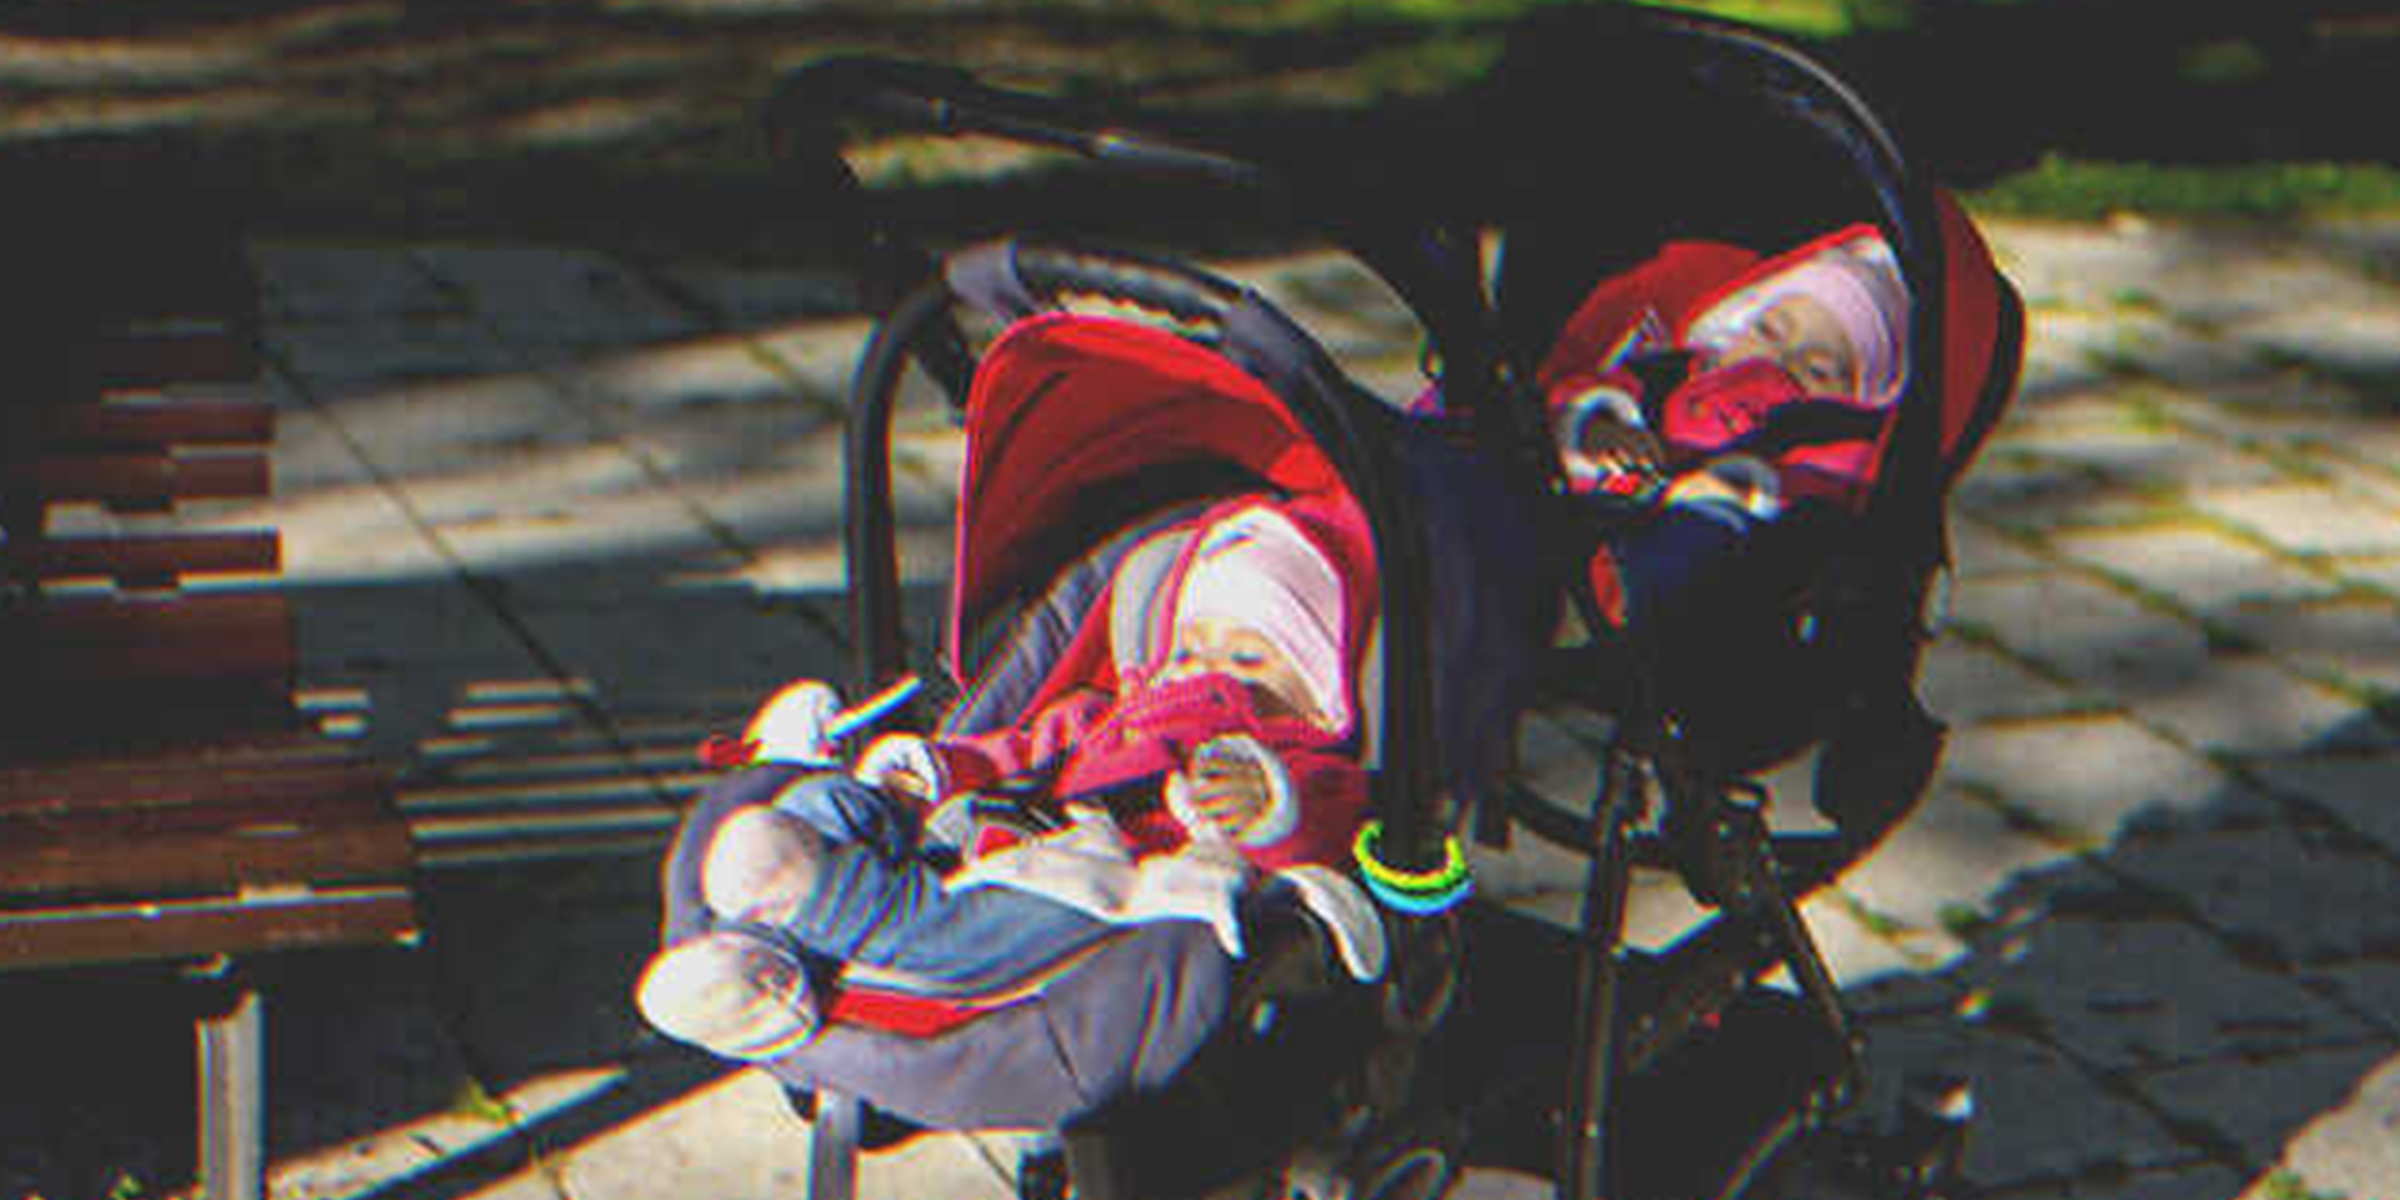 Twin babies in their strollers. | Source: Shutterstock